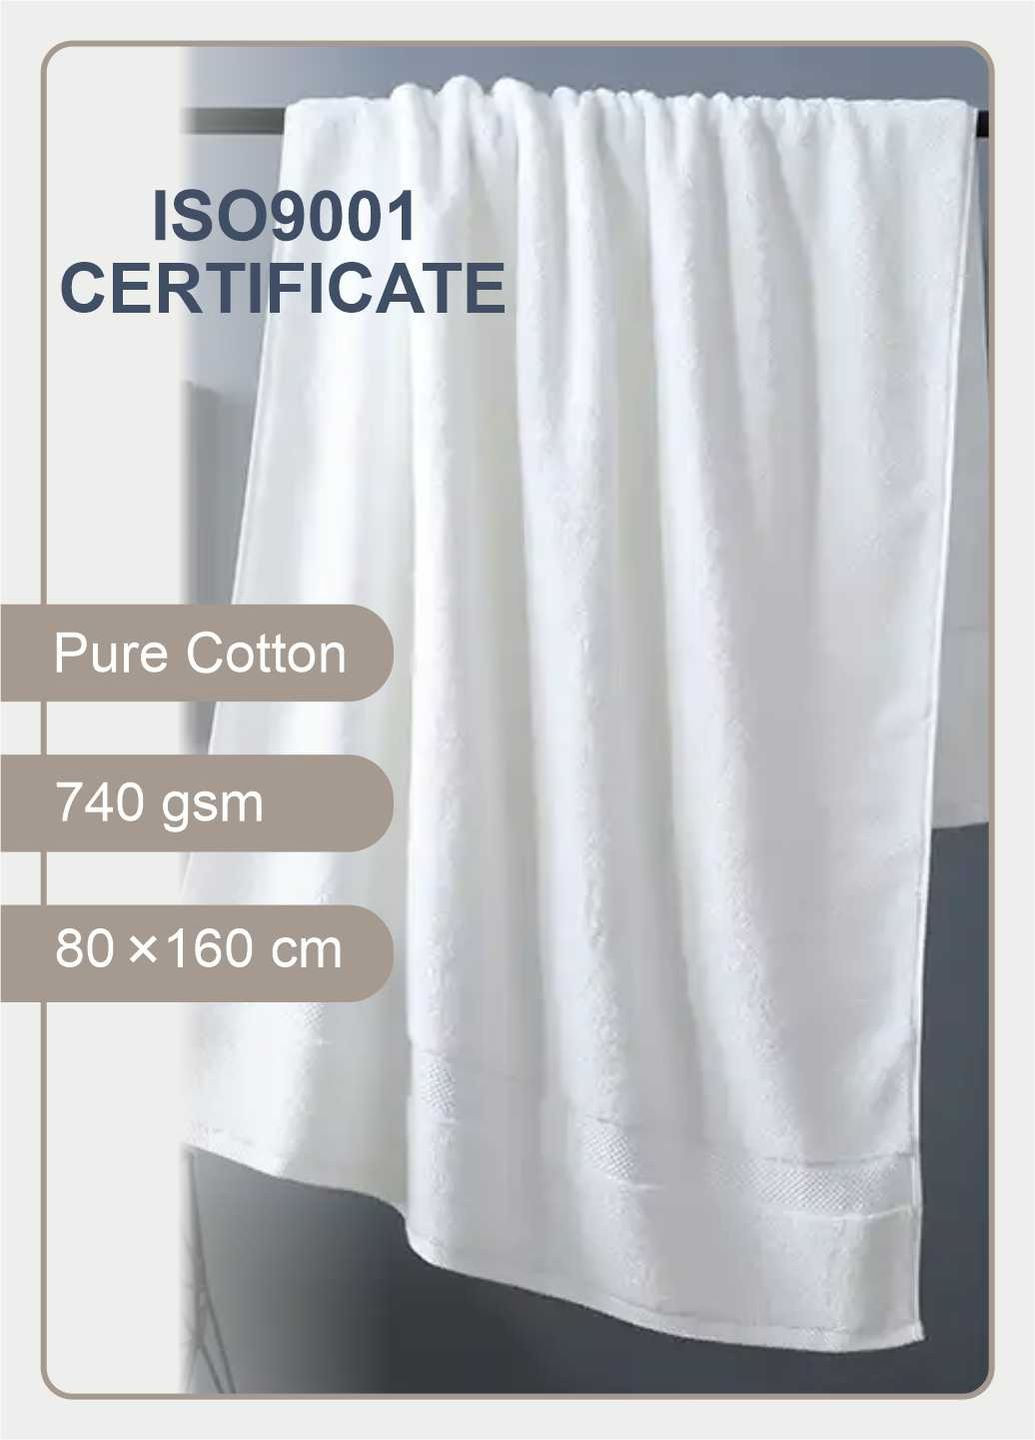 Lovely Svi полотенце xl (80 на160 см) - хлопок /махра -белый однотонный белый производство - Китай